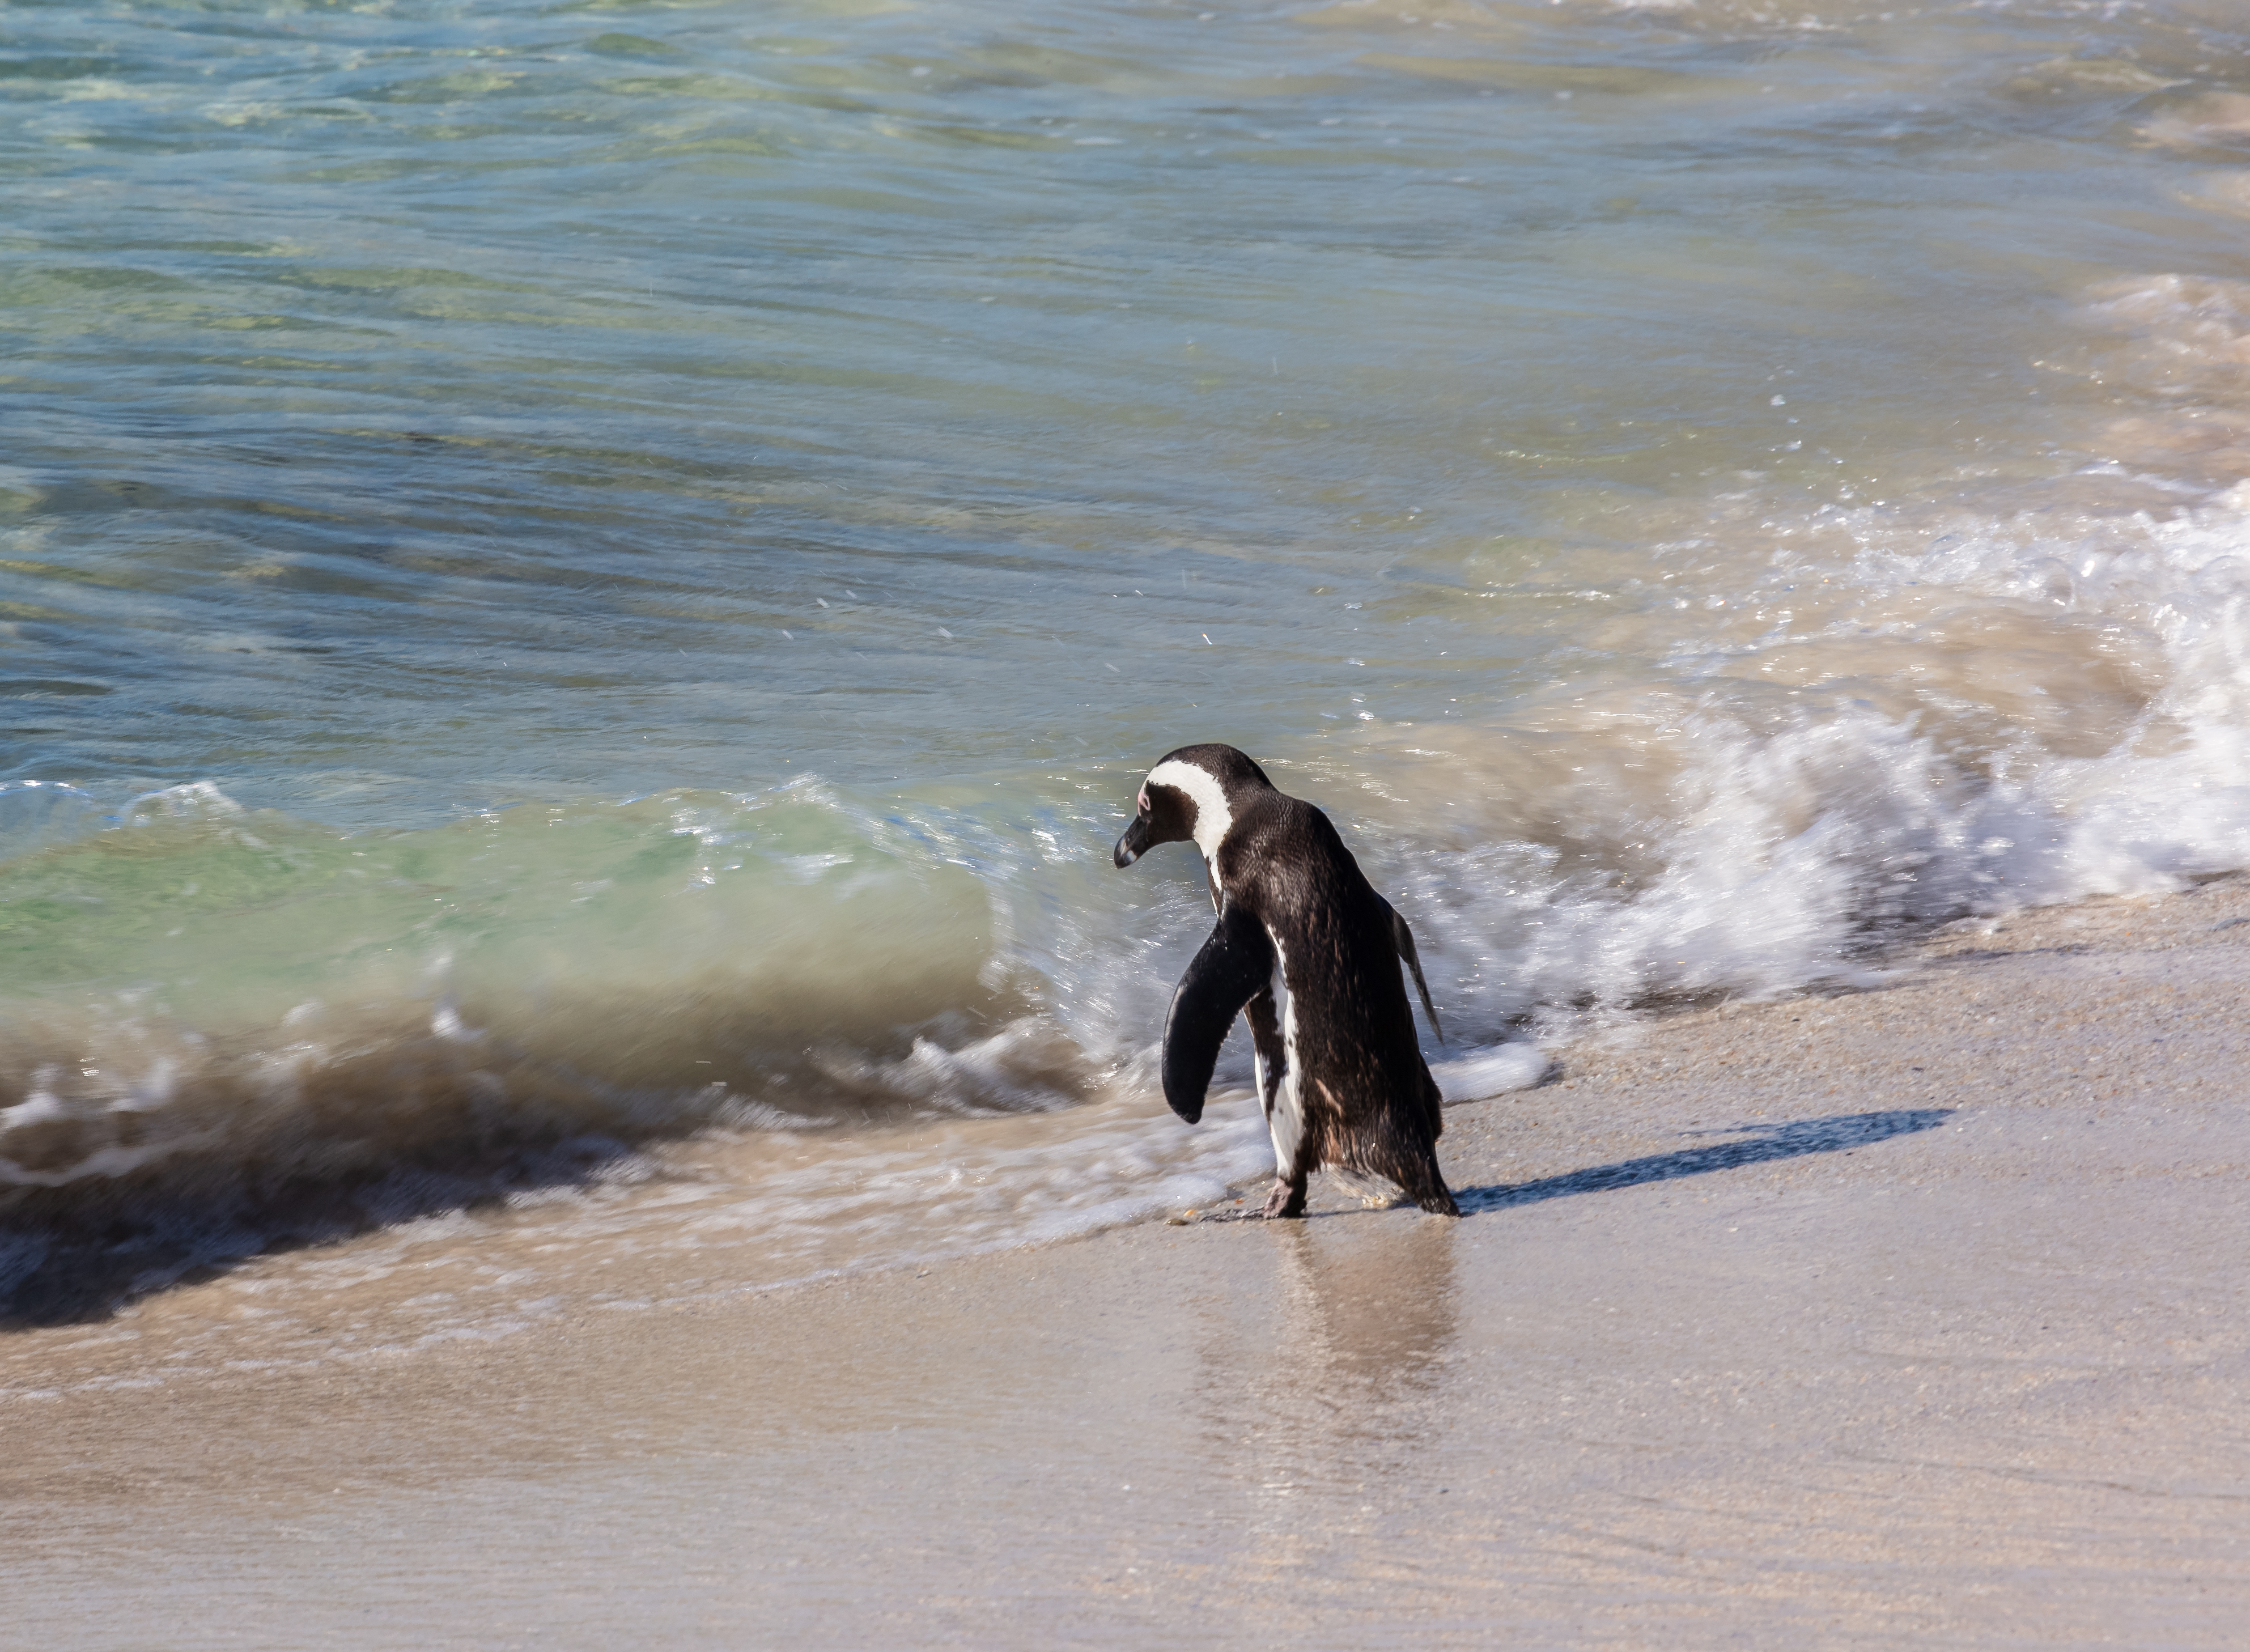 Pingüino de El Cabo (Spheniscus demersus), Playa de Boulders, Simon's Town, Sudáfrica, 2018-07-23, DD 34